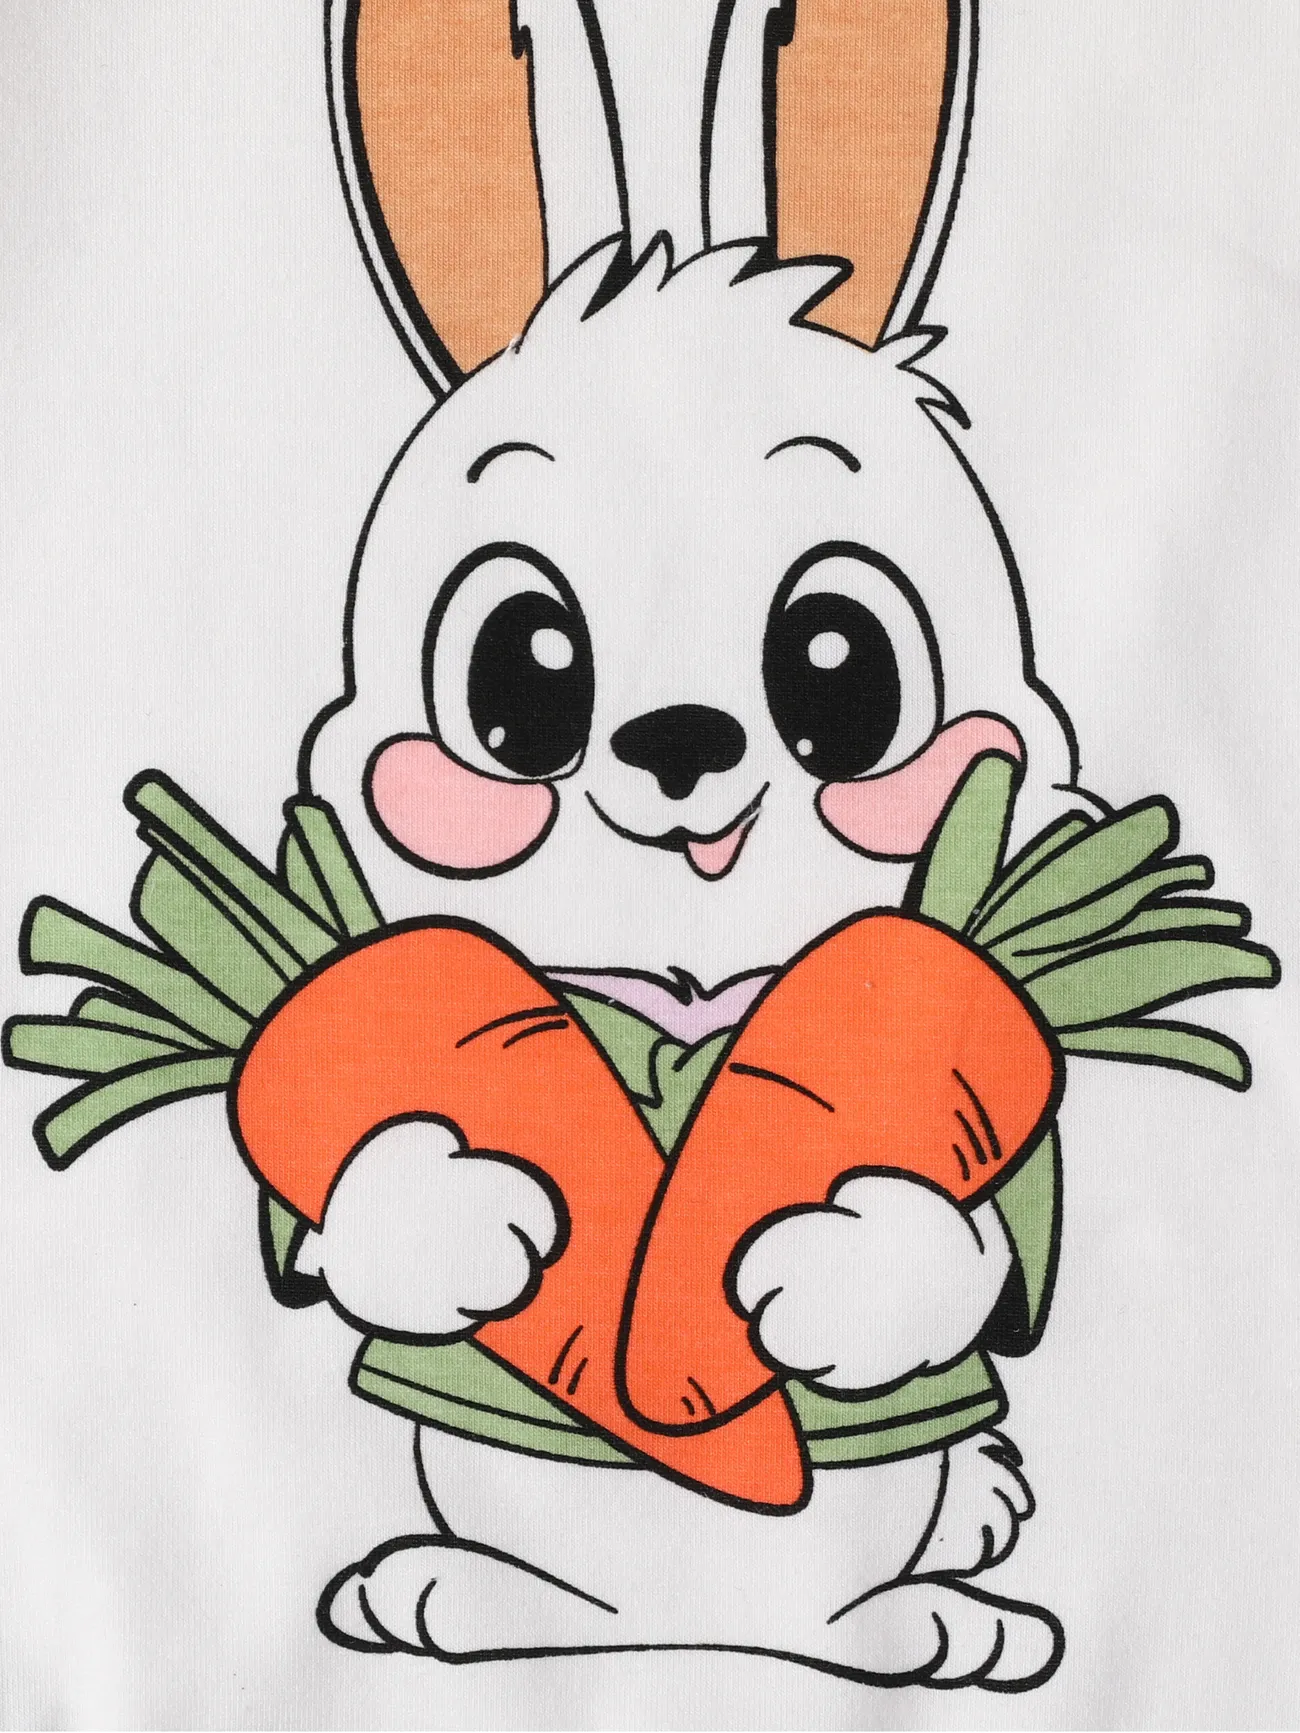 Baby Boy Rabbit Onesie Cute Animal Pattern Short Sleeve Romper White big image 1